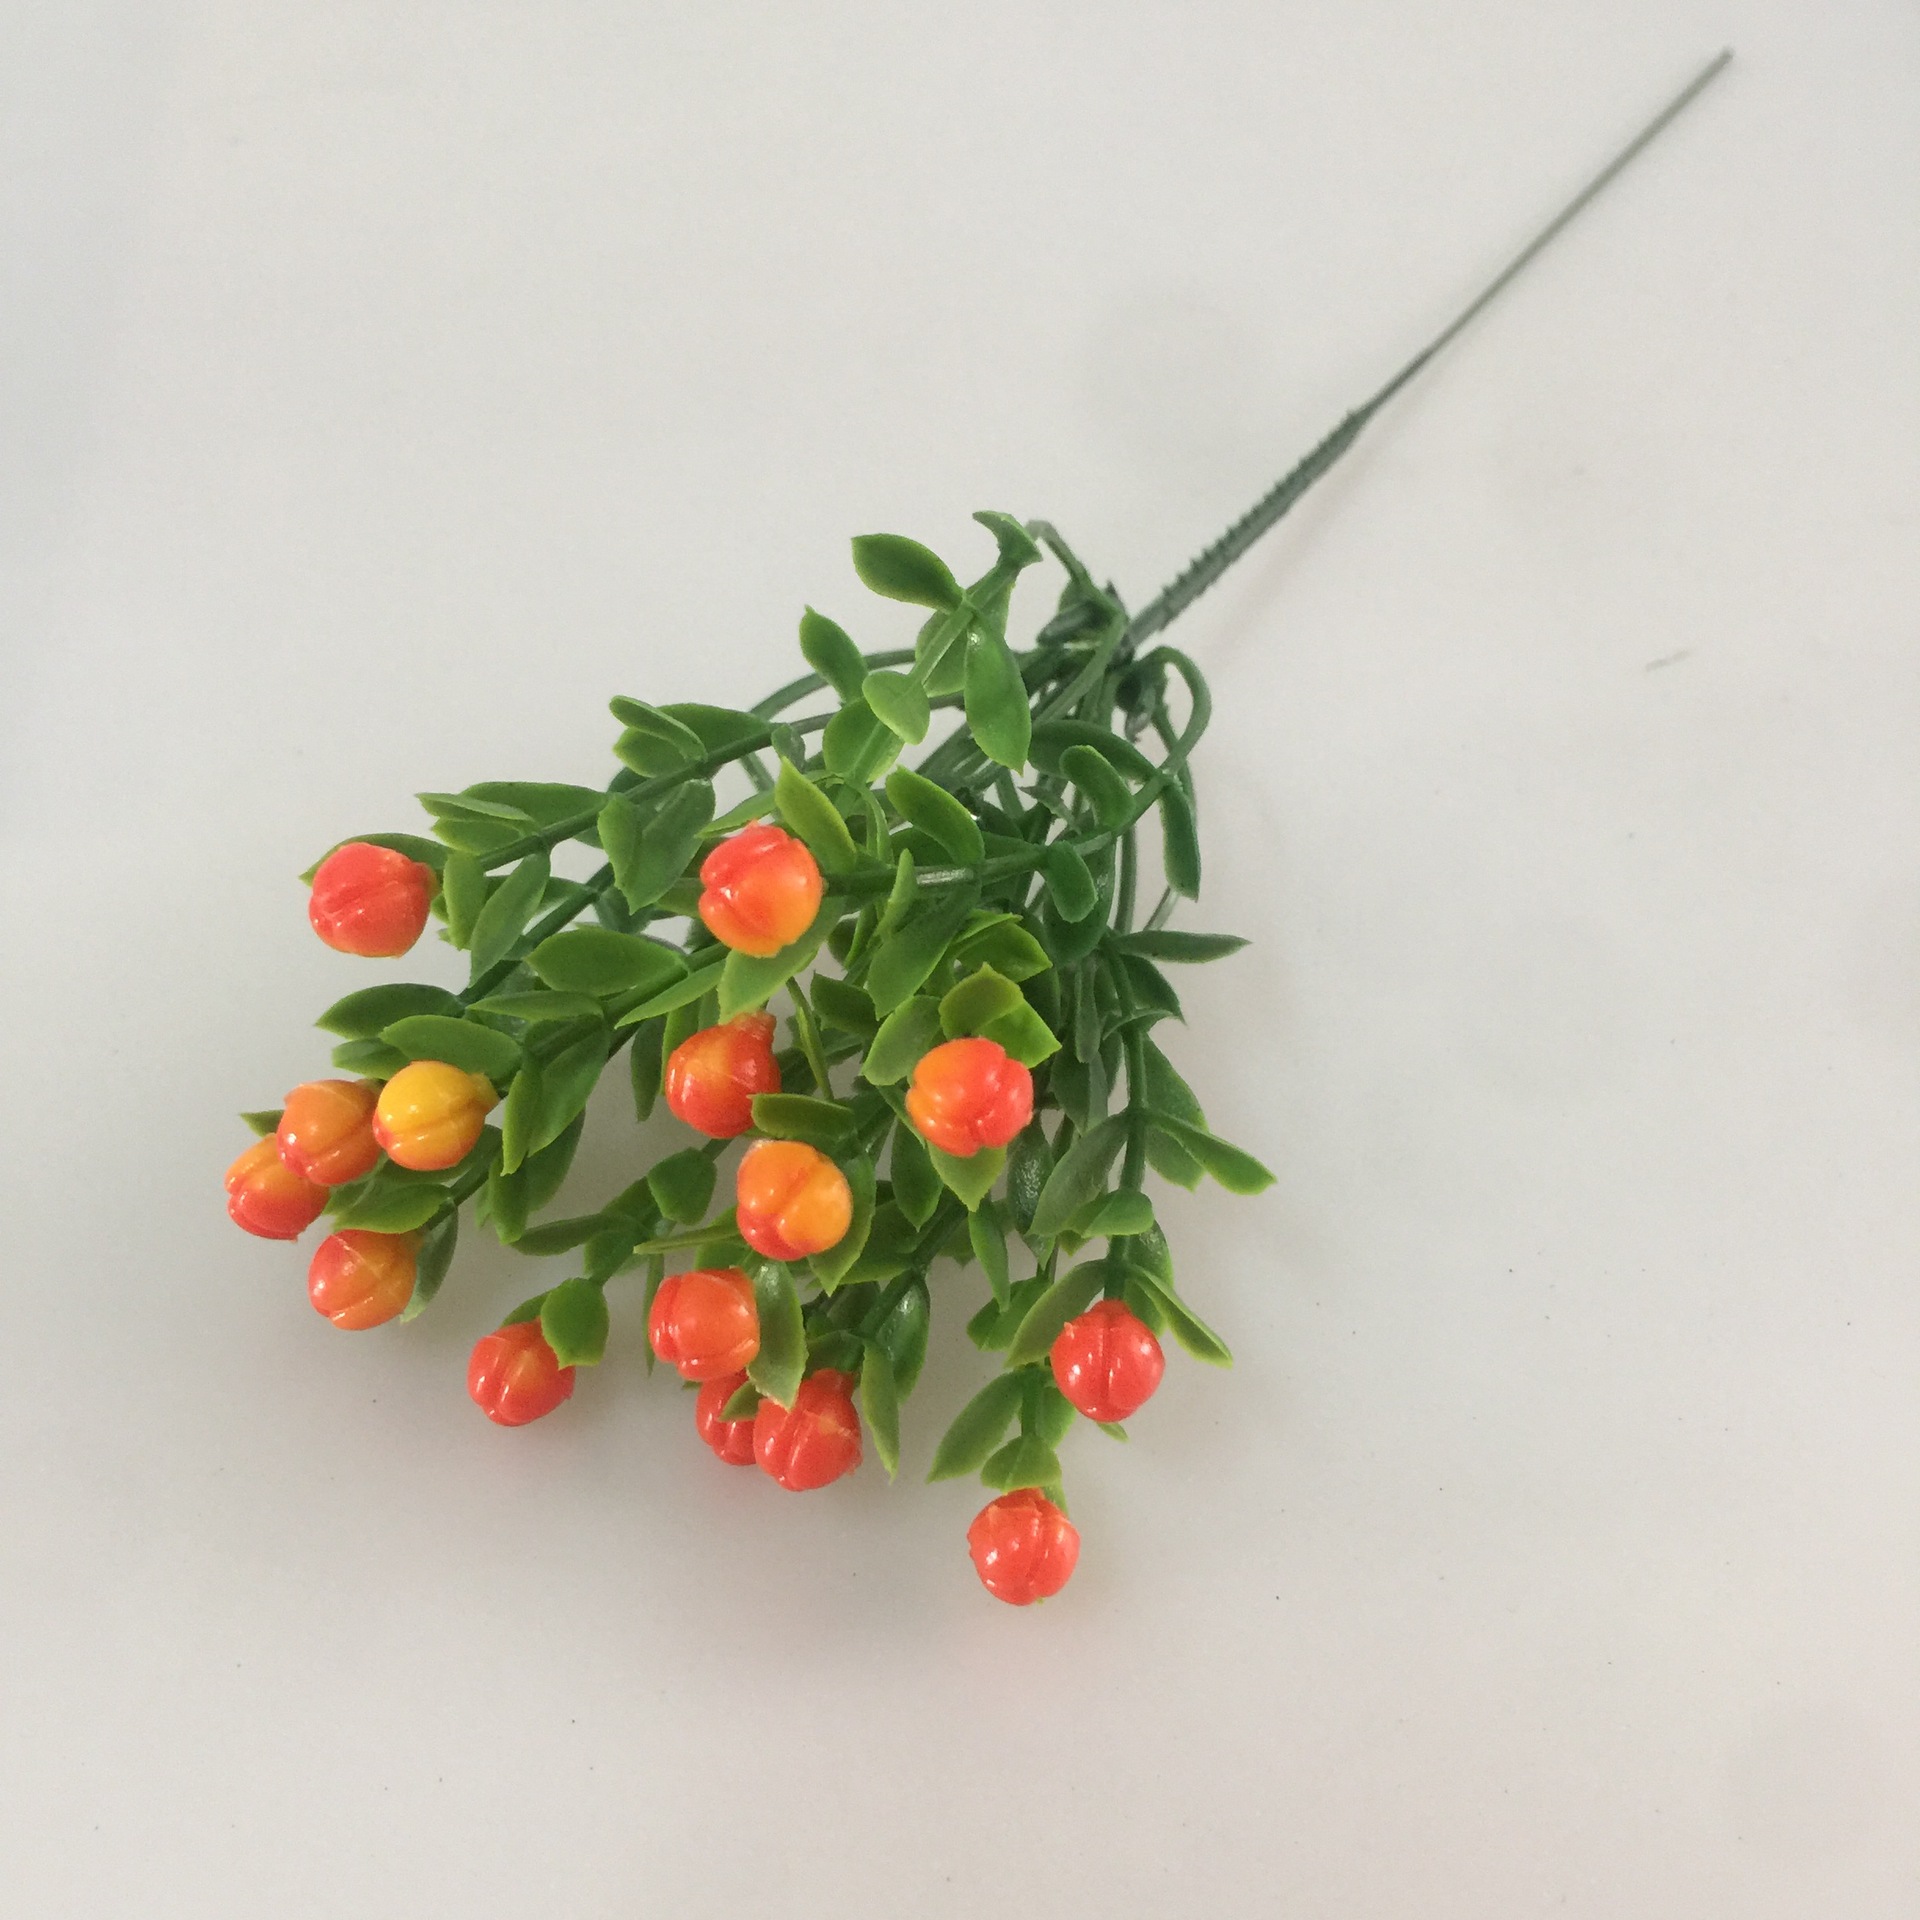 Factory Direct Sales Simulation Milan Grain Single Artificial Flower Domestic Ornaments Shooting Props Crafts Flower Arrangement